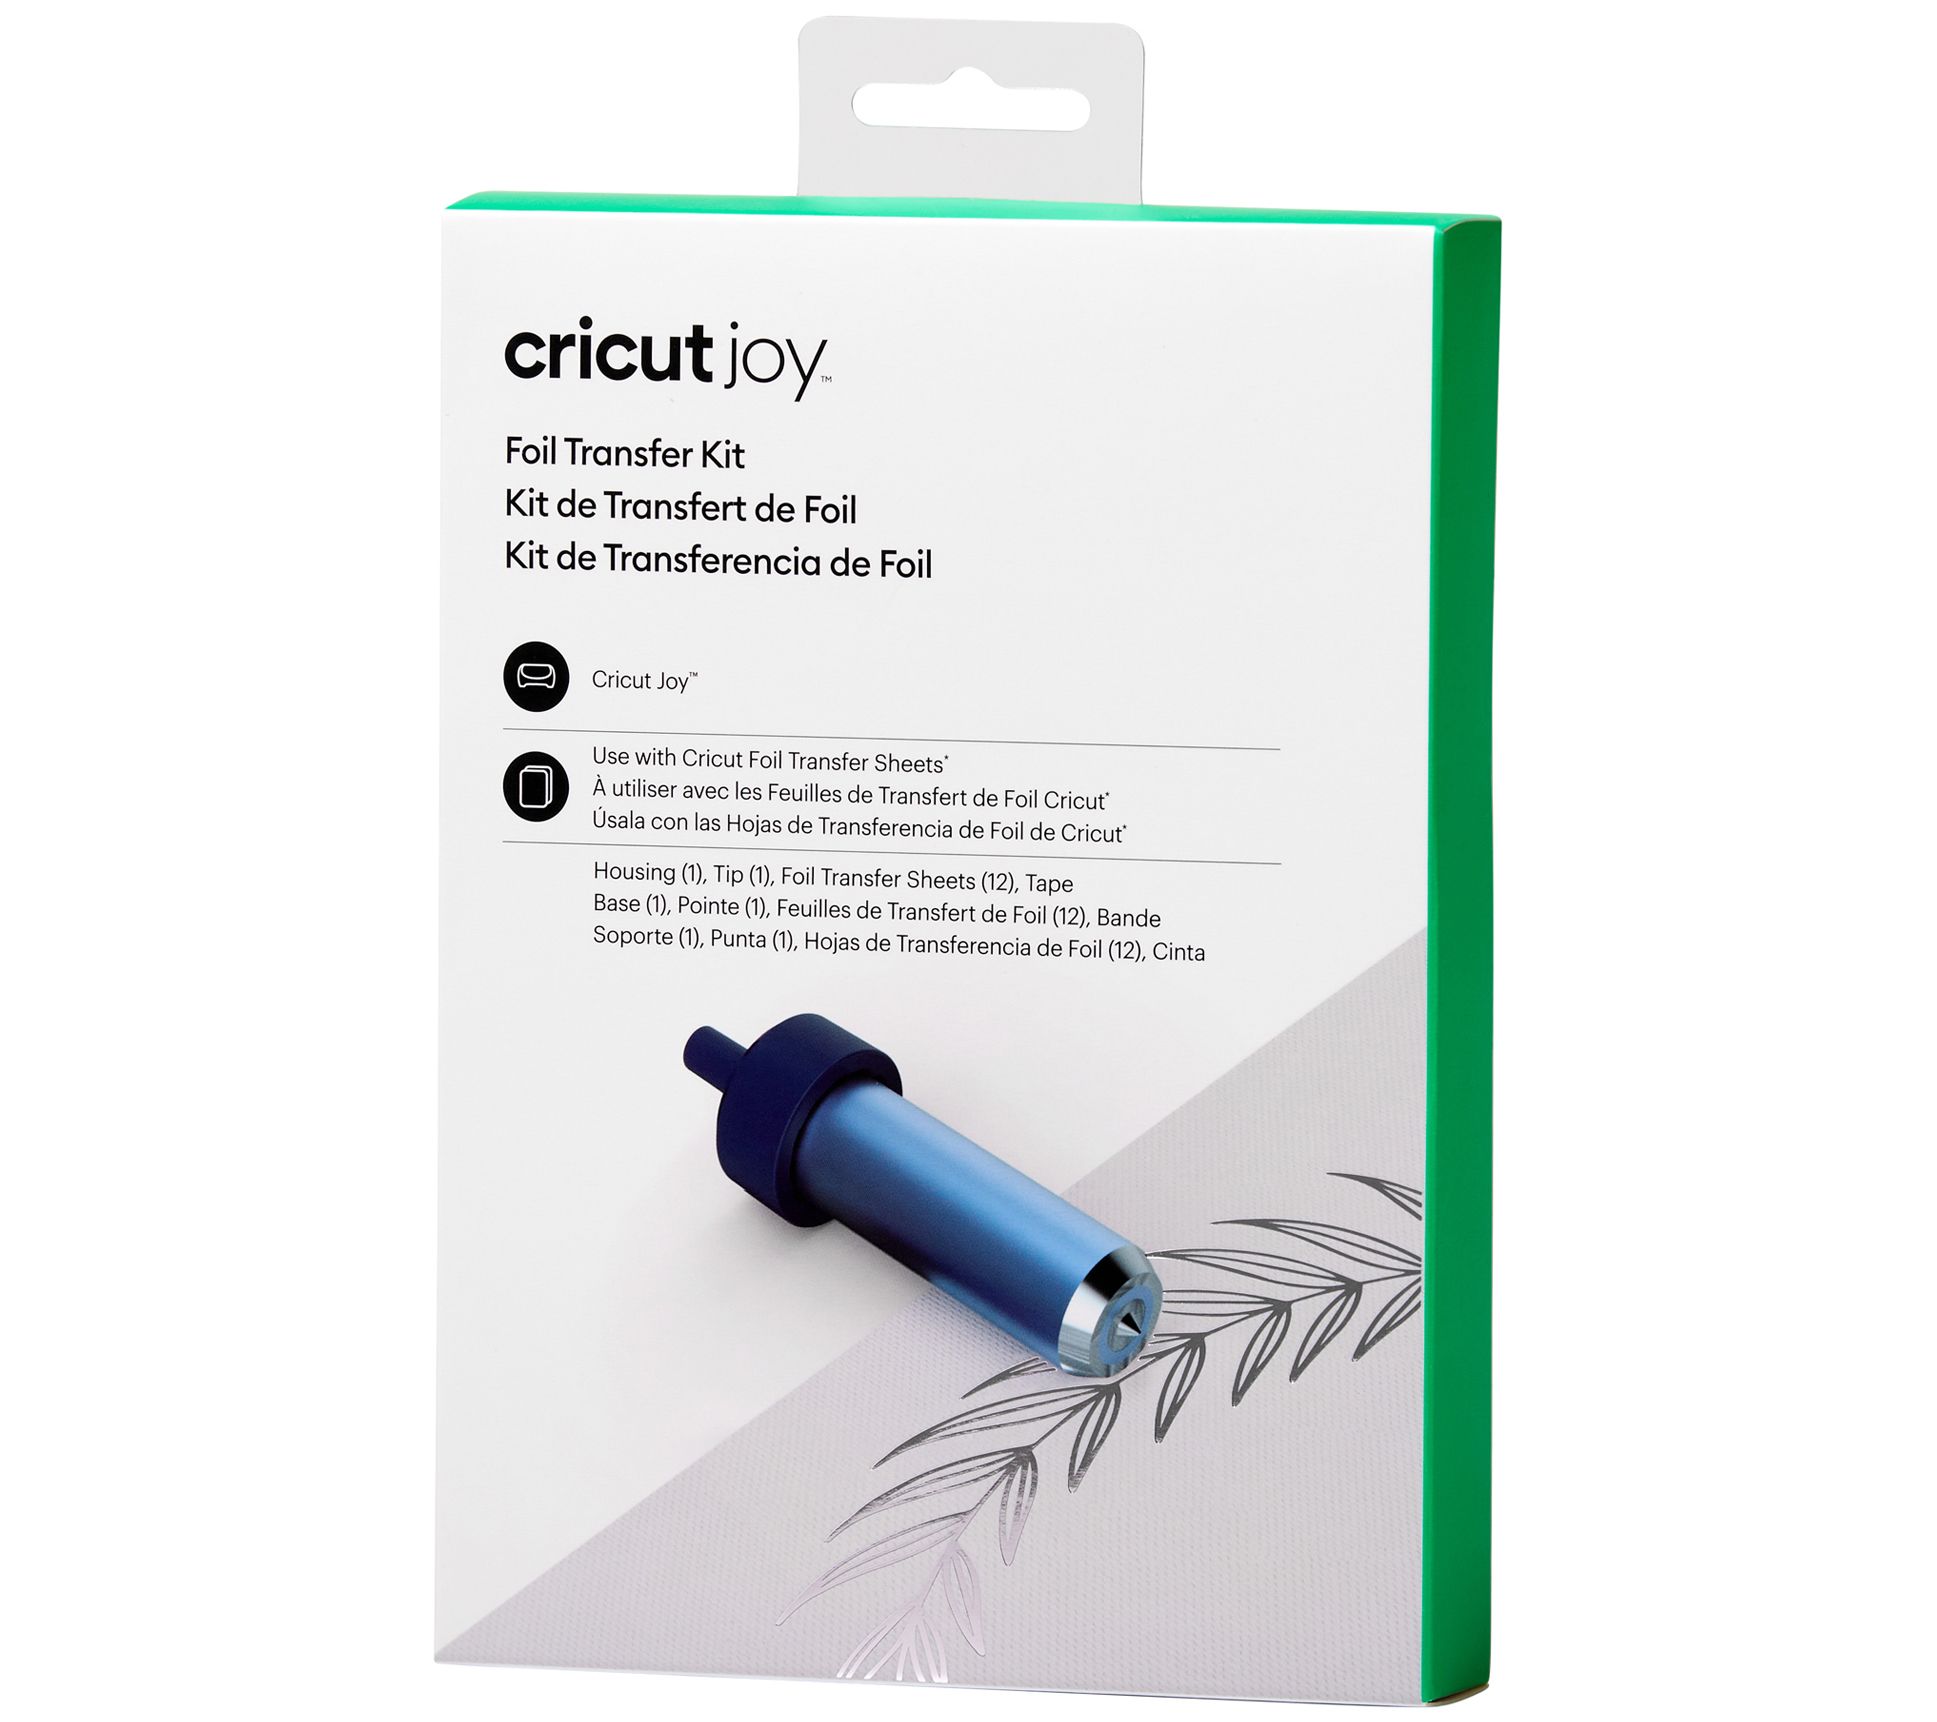 Cricut 5pc Metallic Medium Point Pen Set